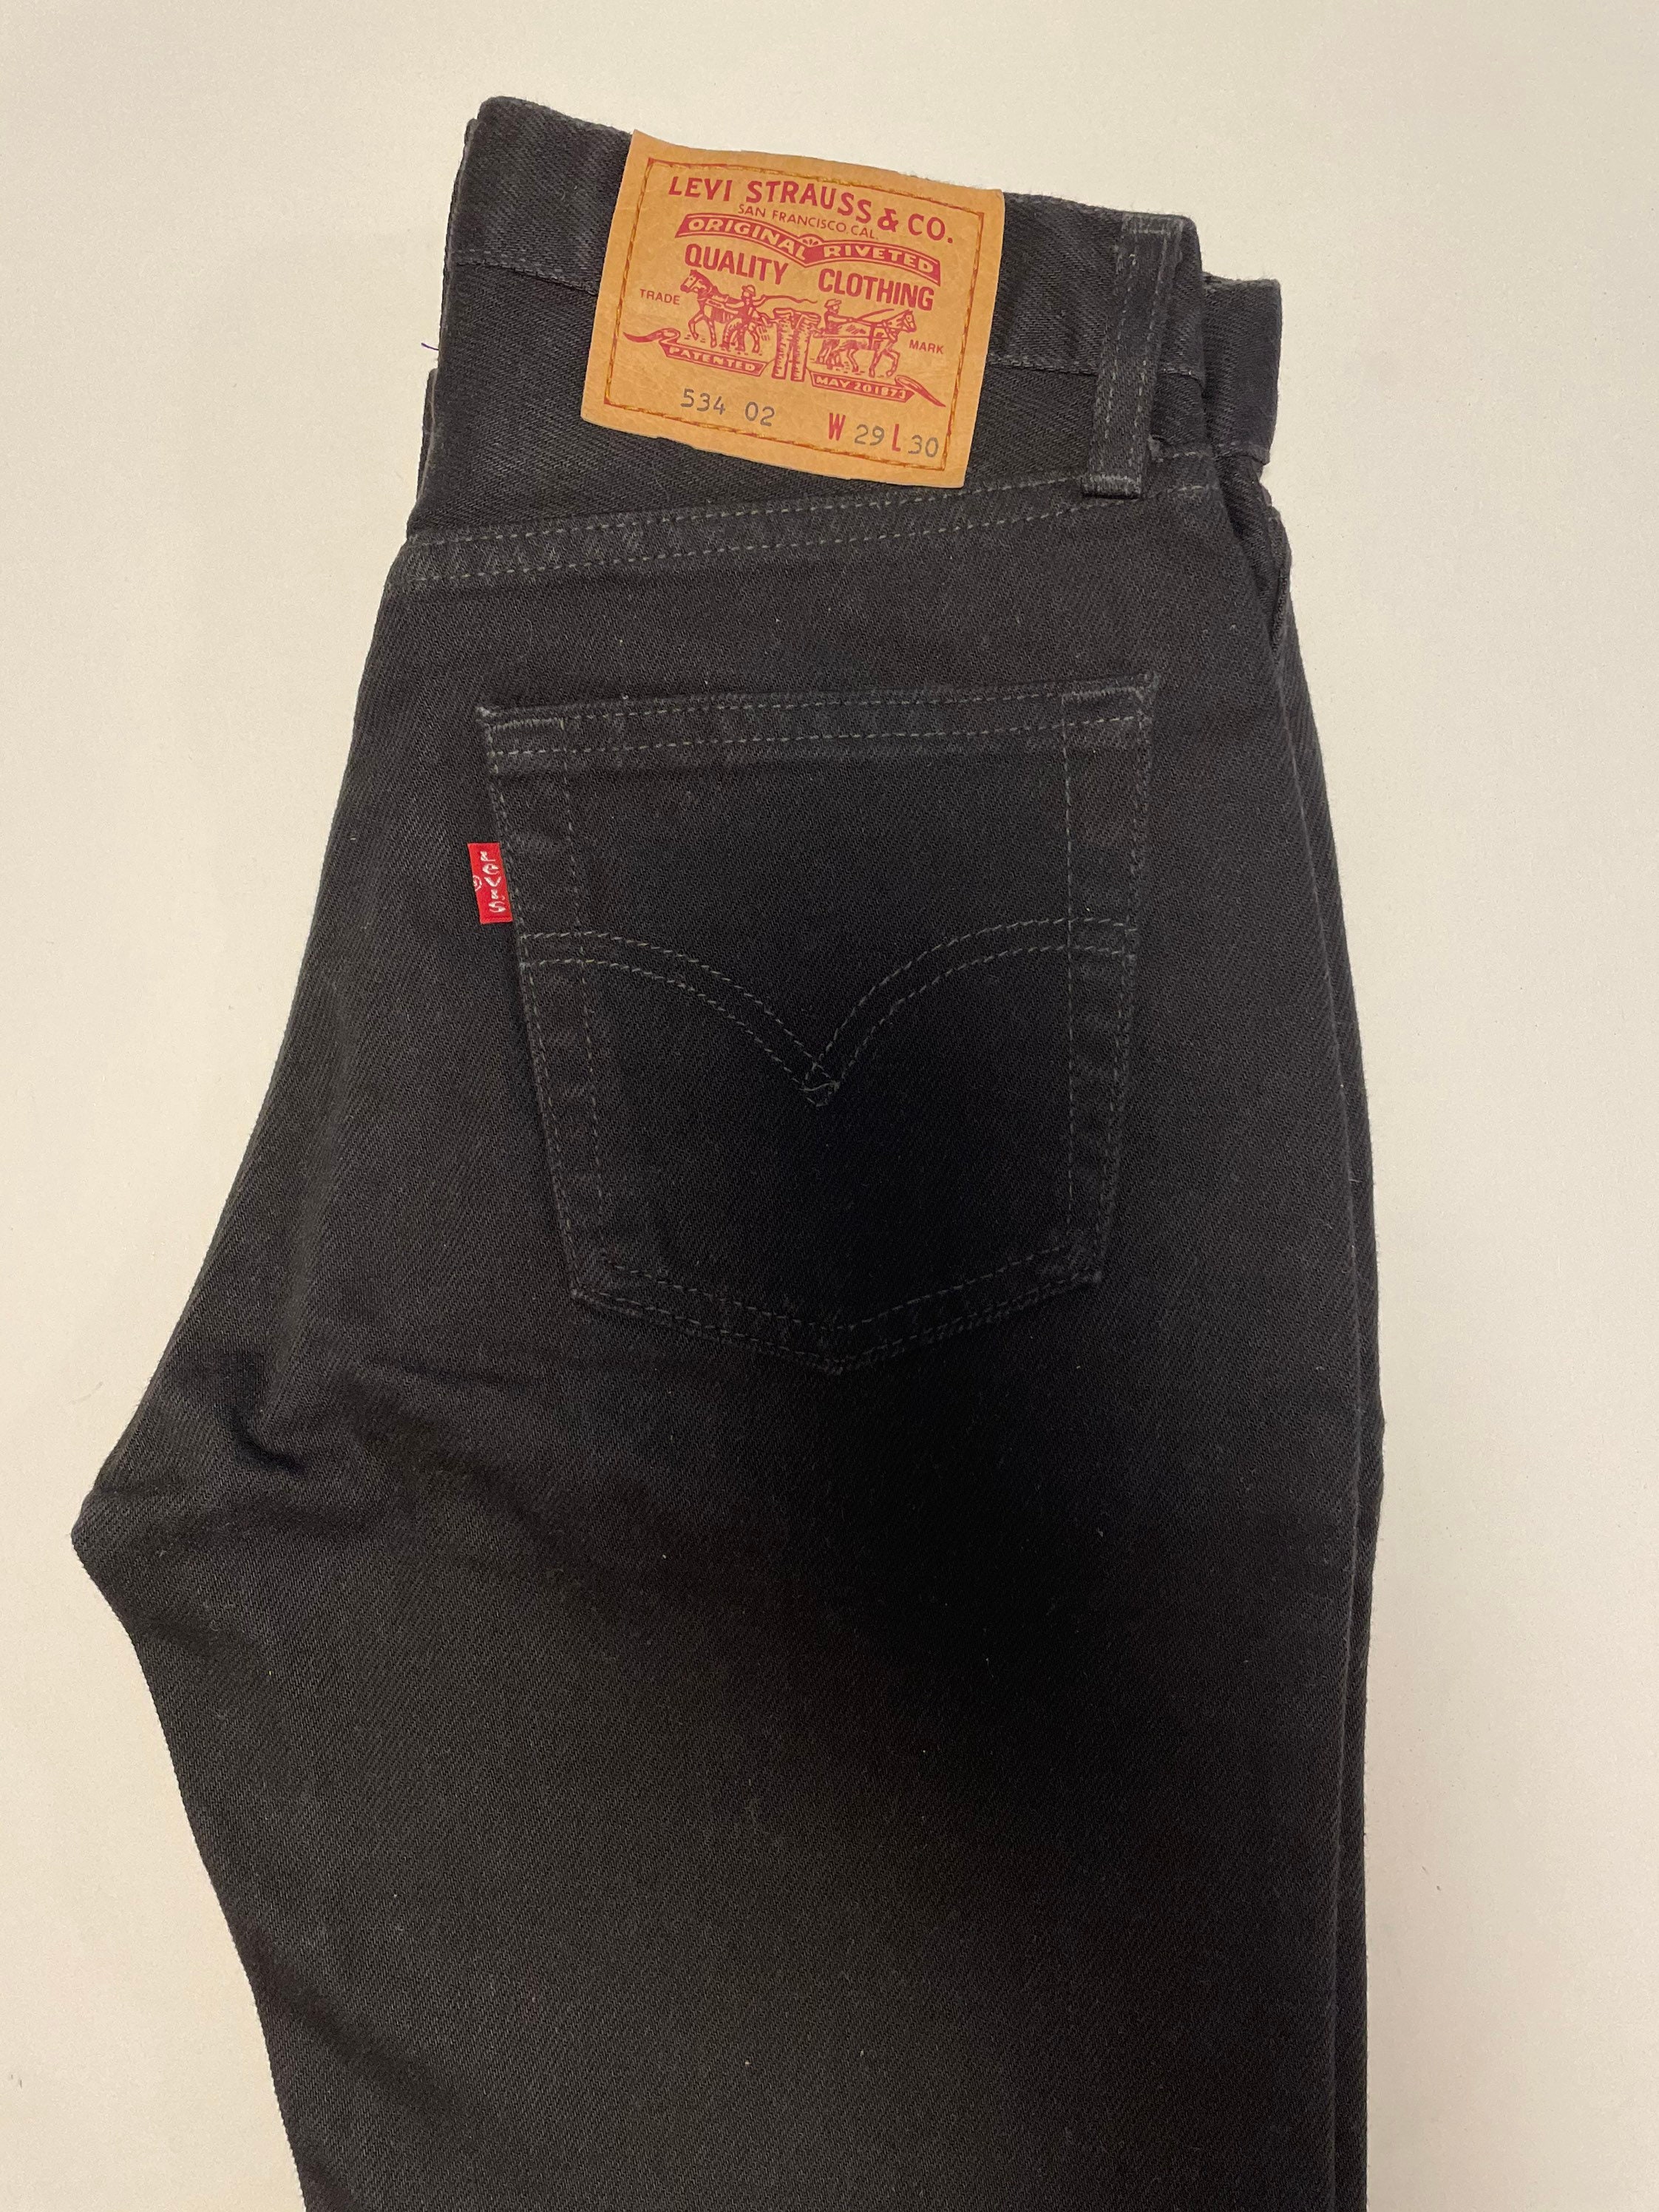 Vintage Levis Schwarz 534 Jeans W29 L30 Neu | Etsy